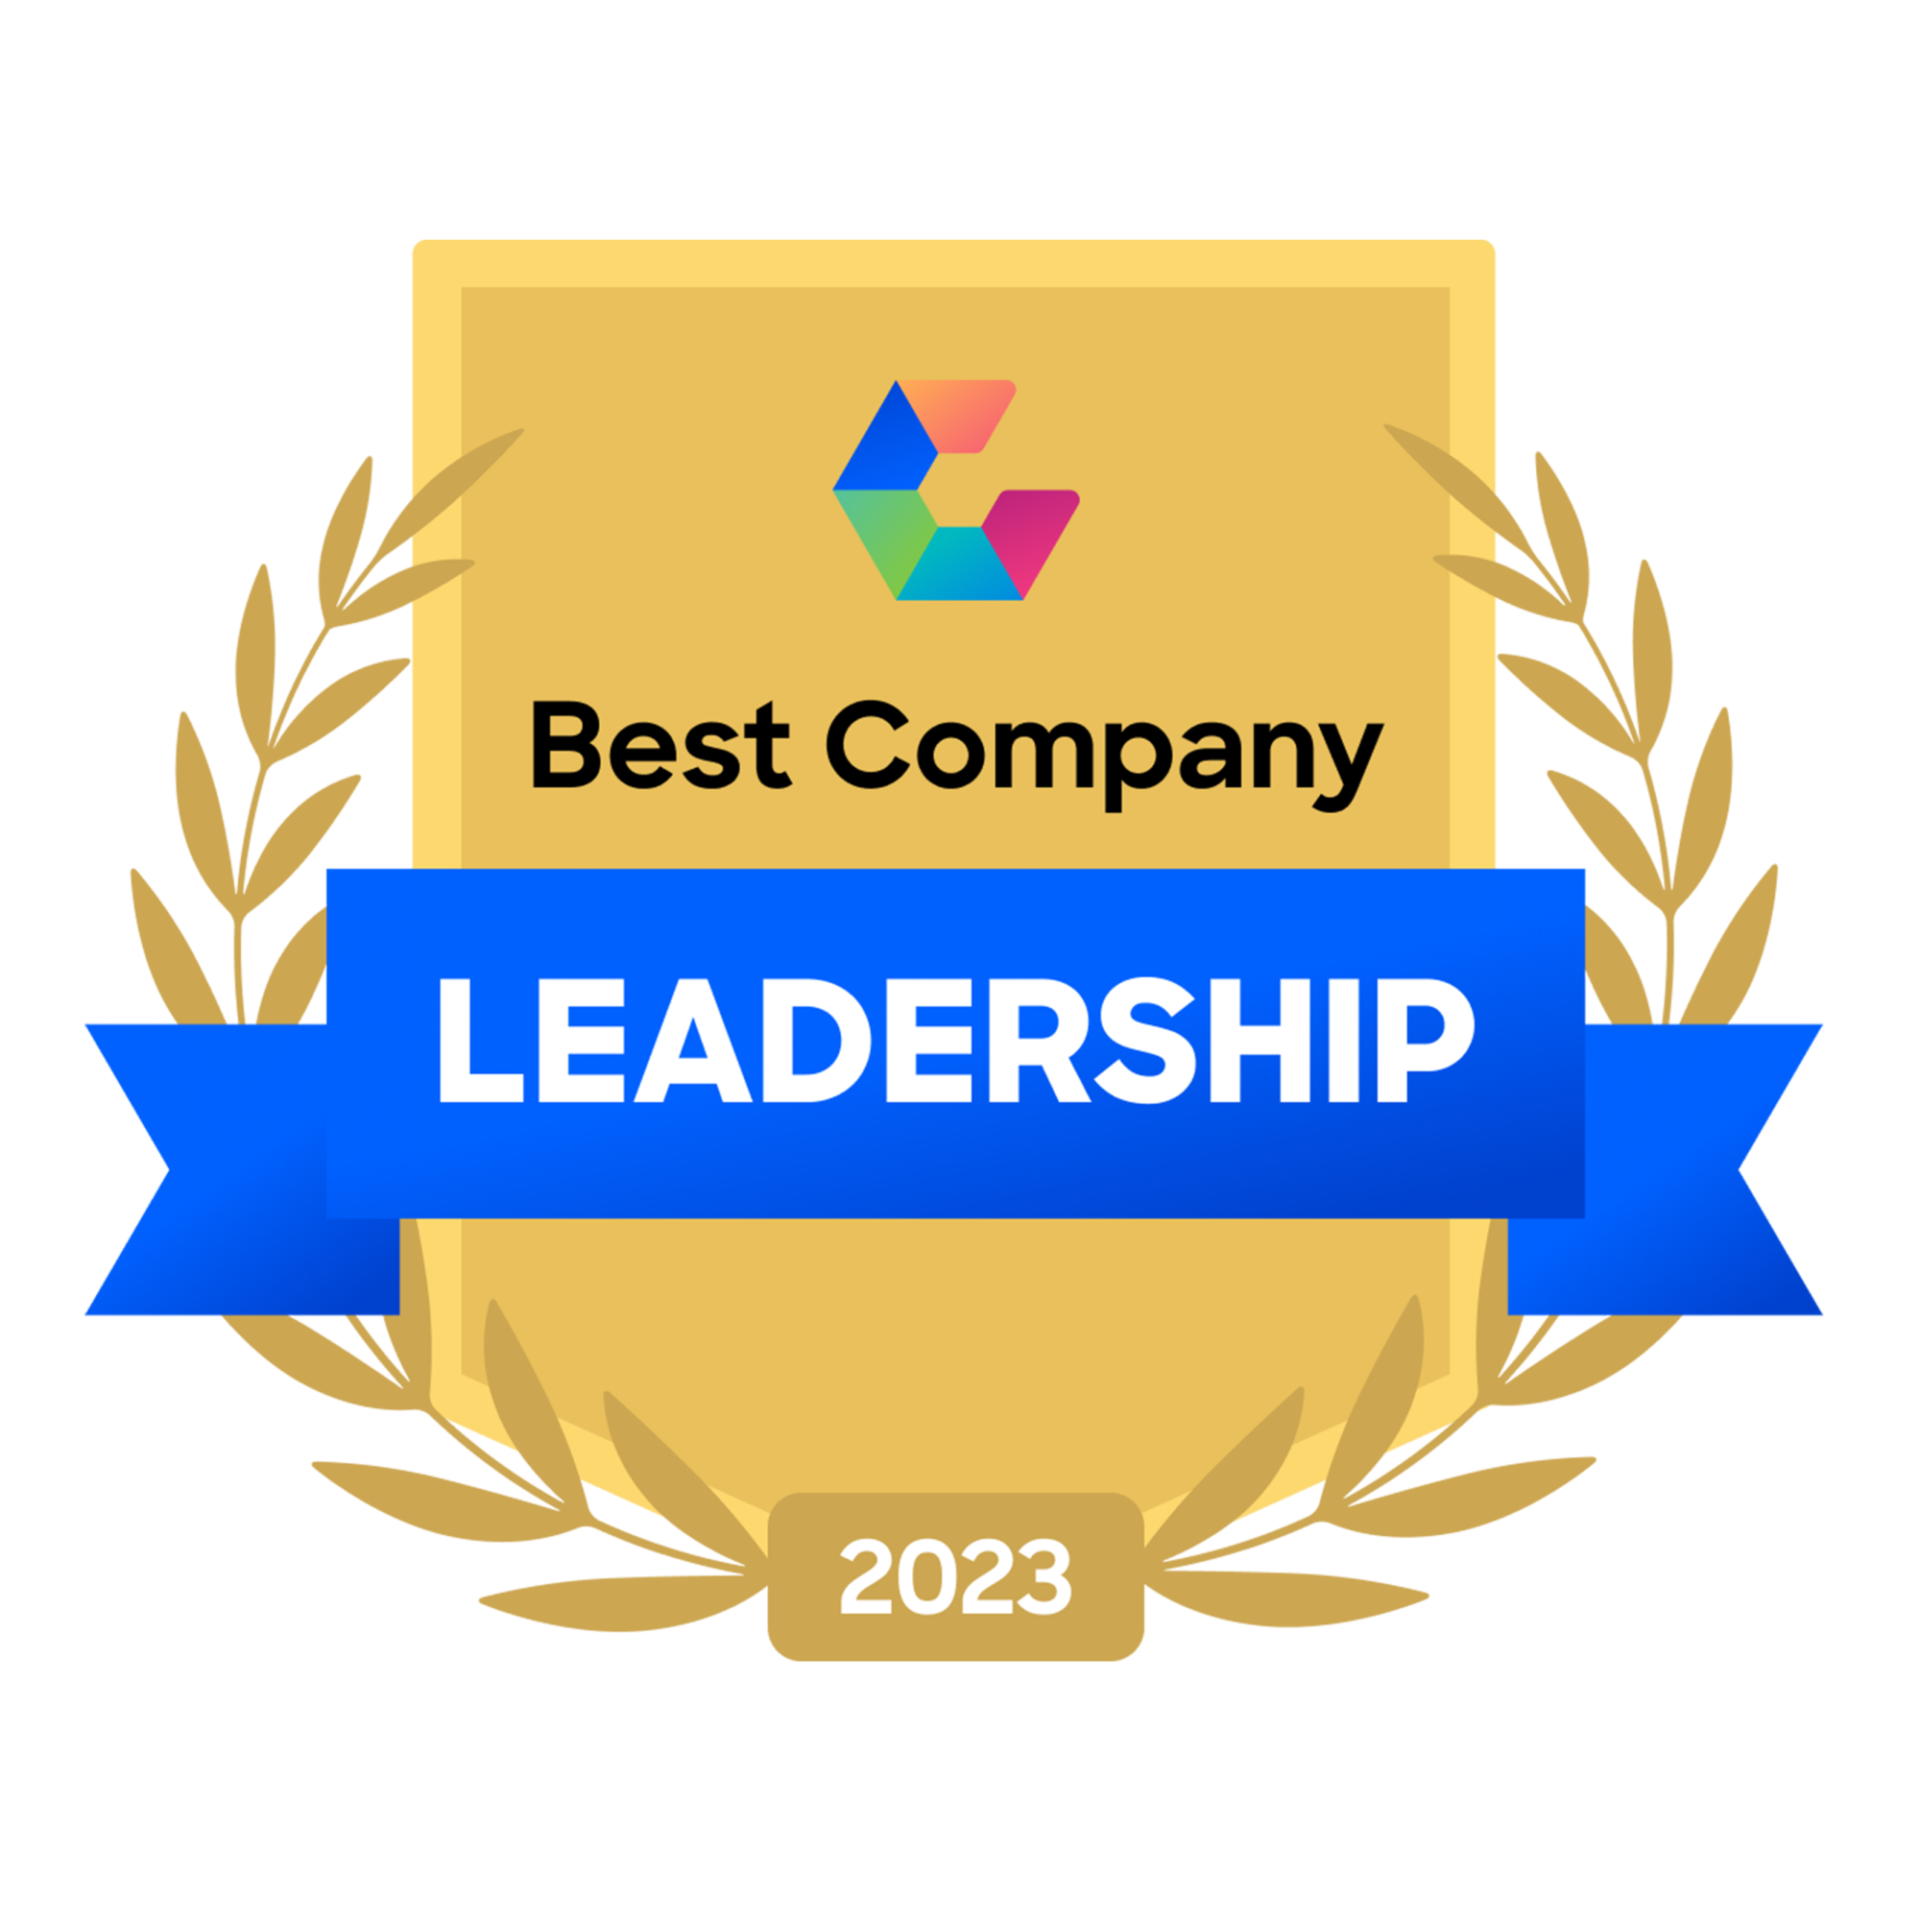 Best company leadership 2023